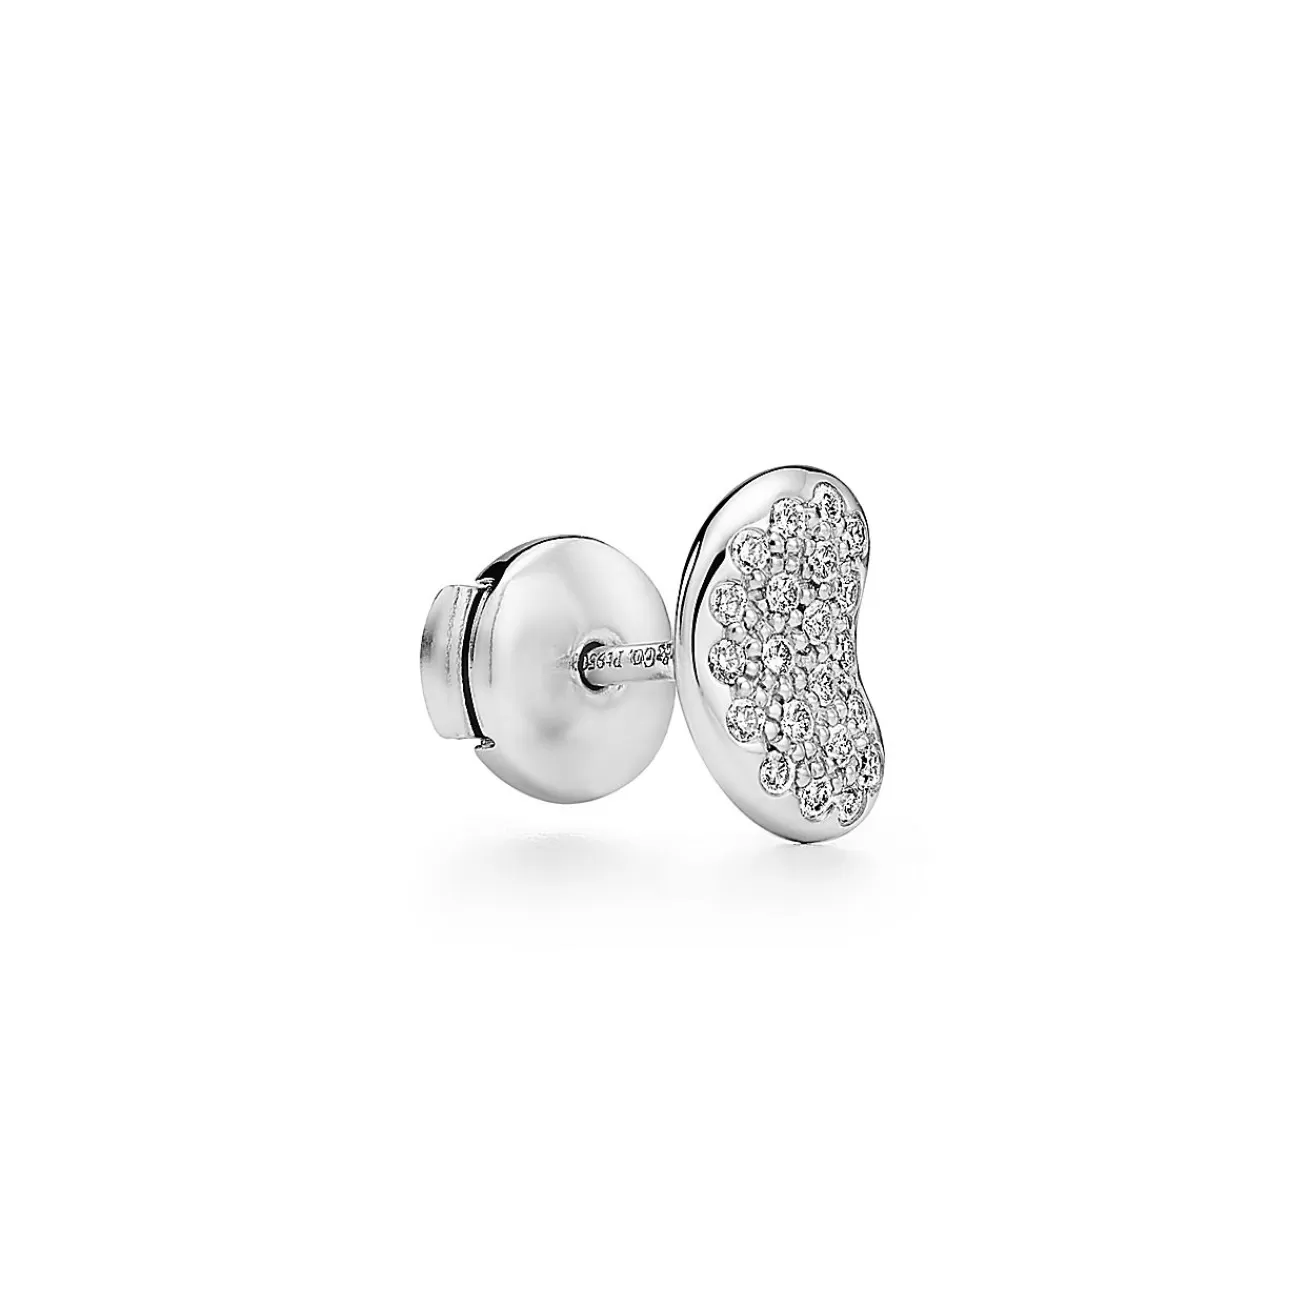 Tiffany & Co. Elsa Peretti® Bean® design Earrings in Platinum with Diamonds, 9 mm | ^ Earrings | Platinum Jewelry